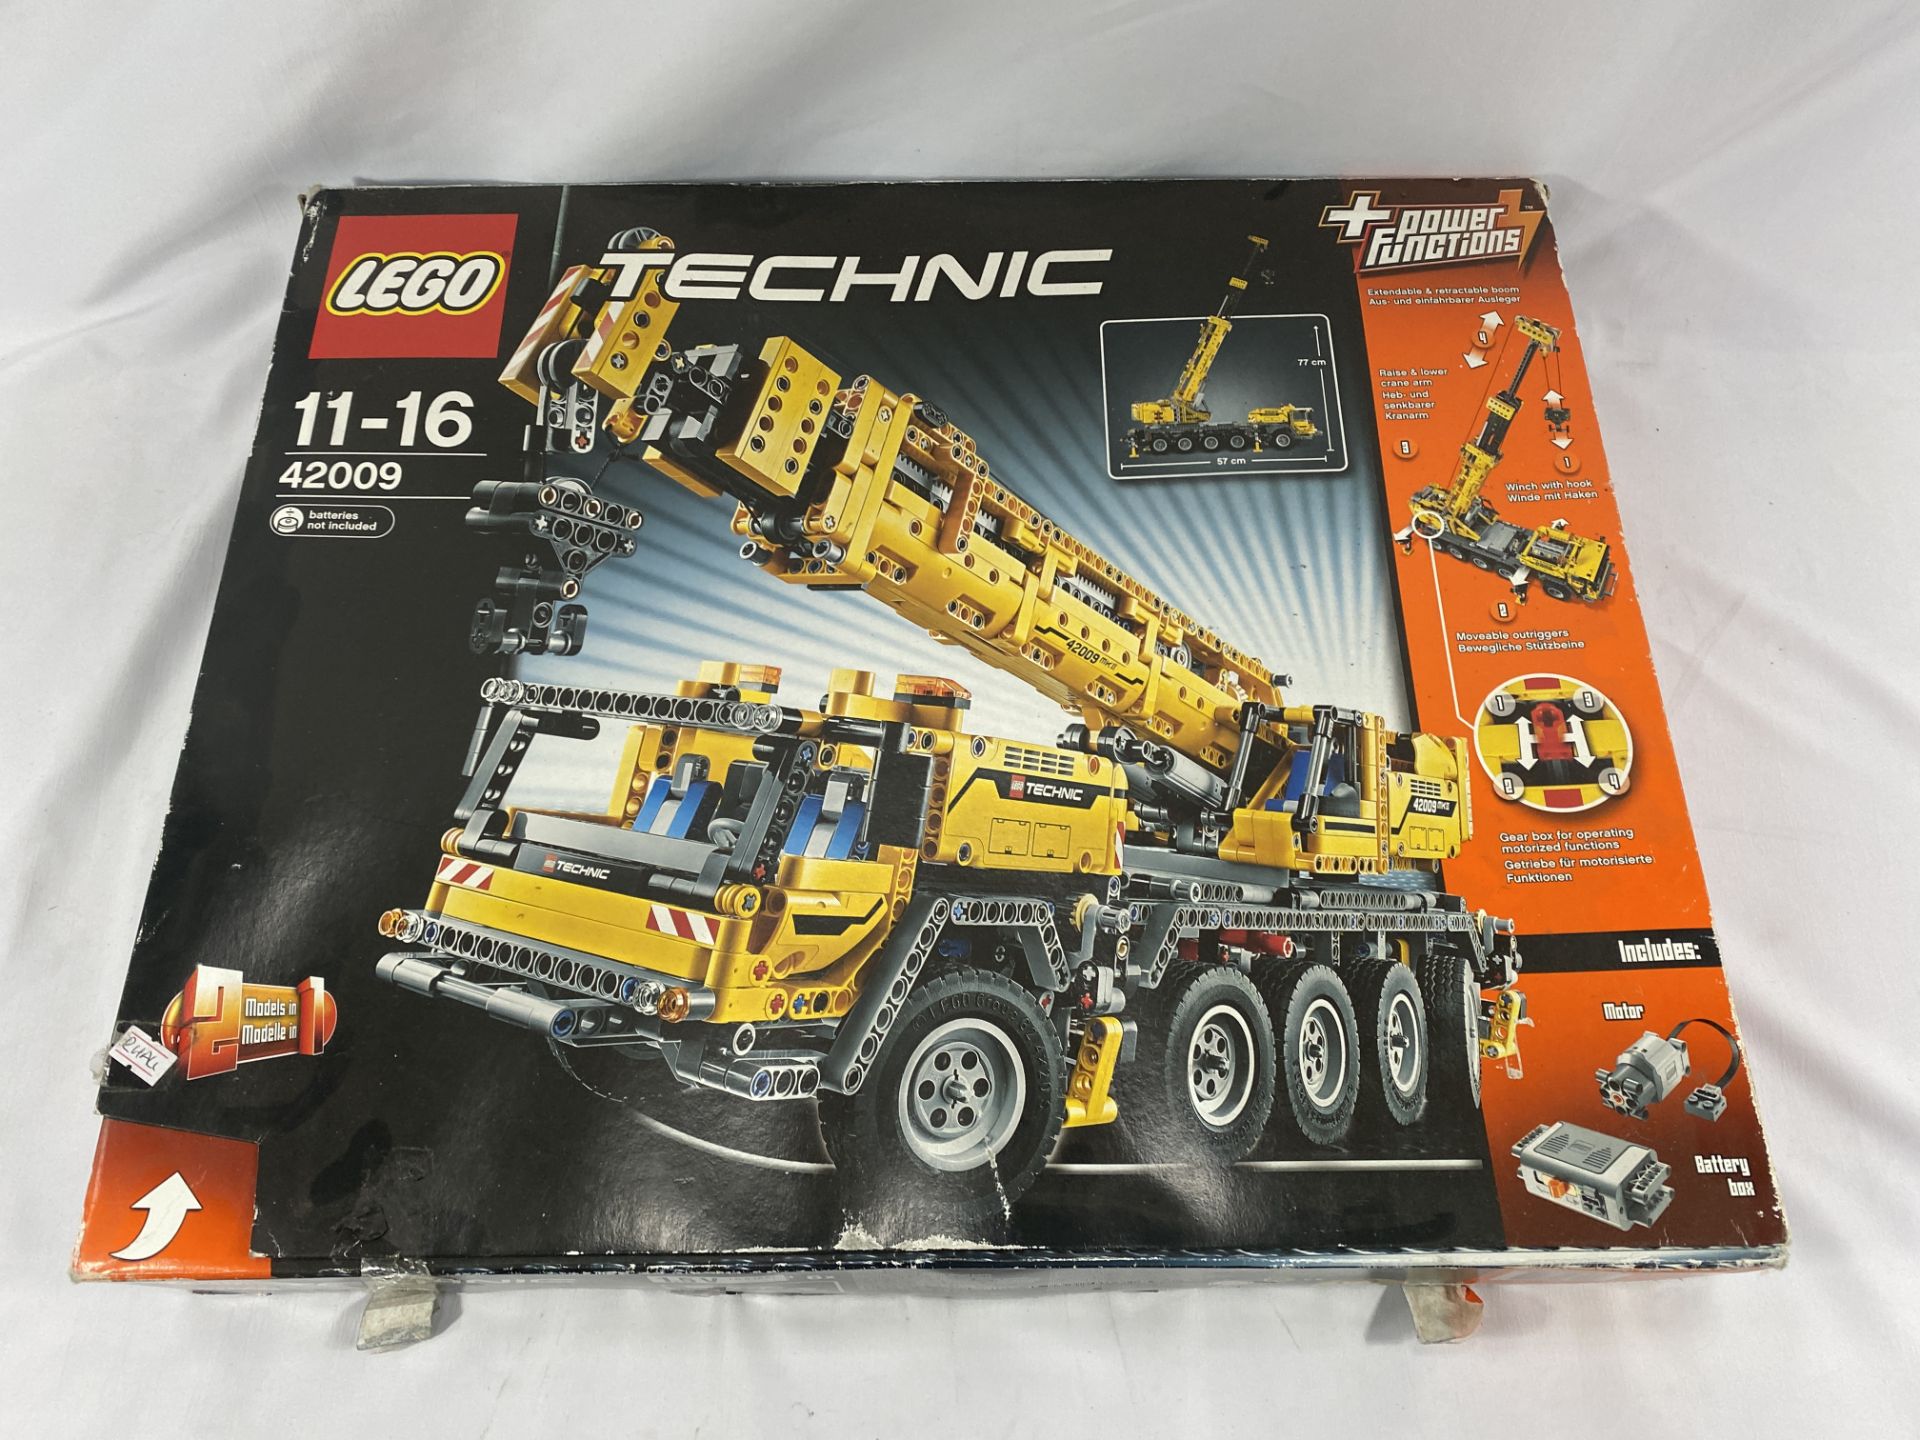 Boxed Lego Technic 42009 mobile crane set